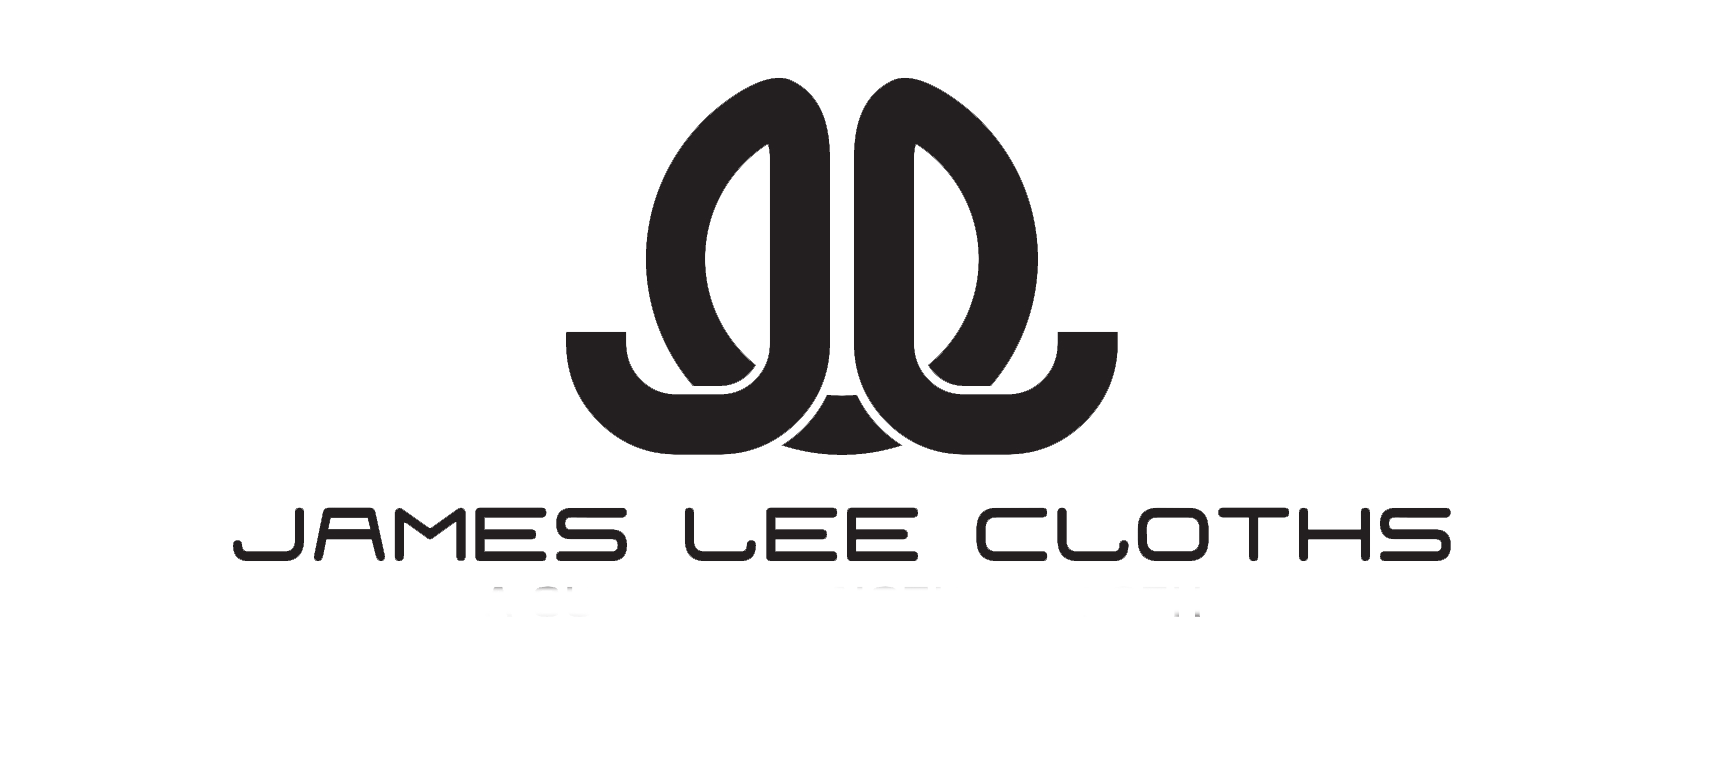 James Lee Cloths